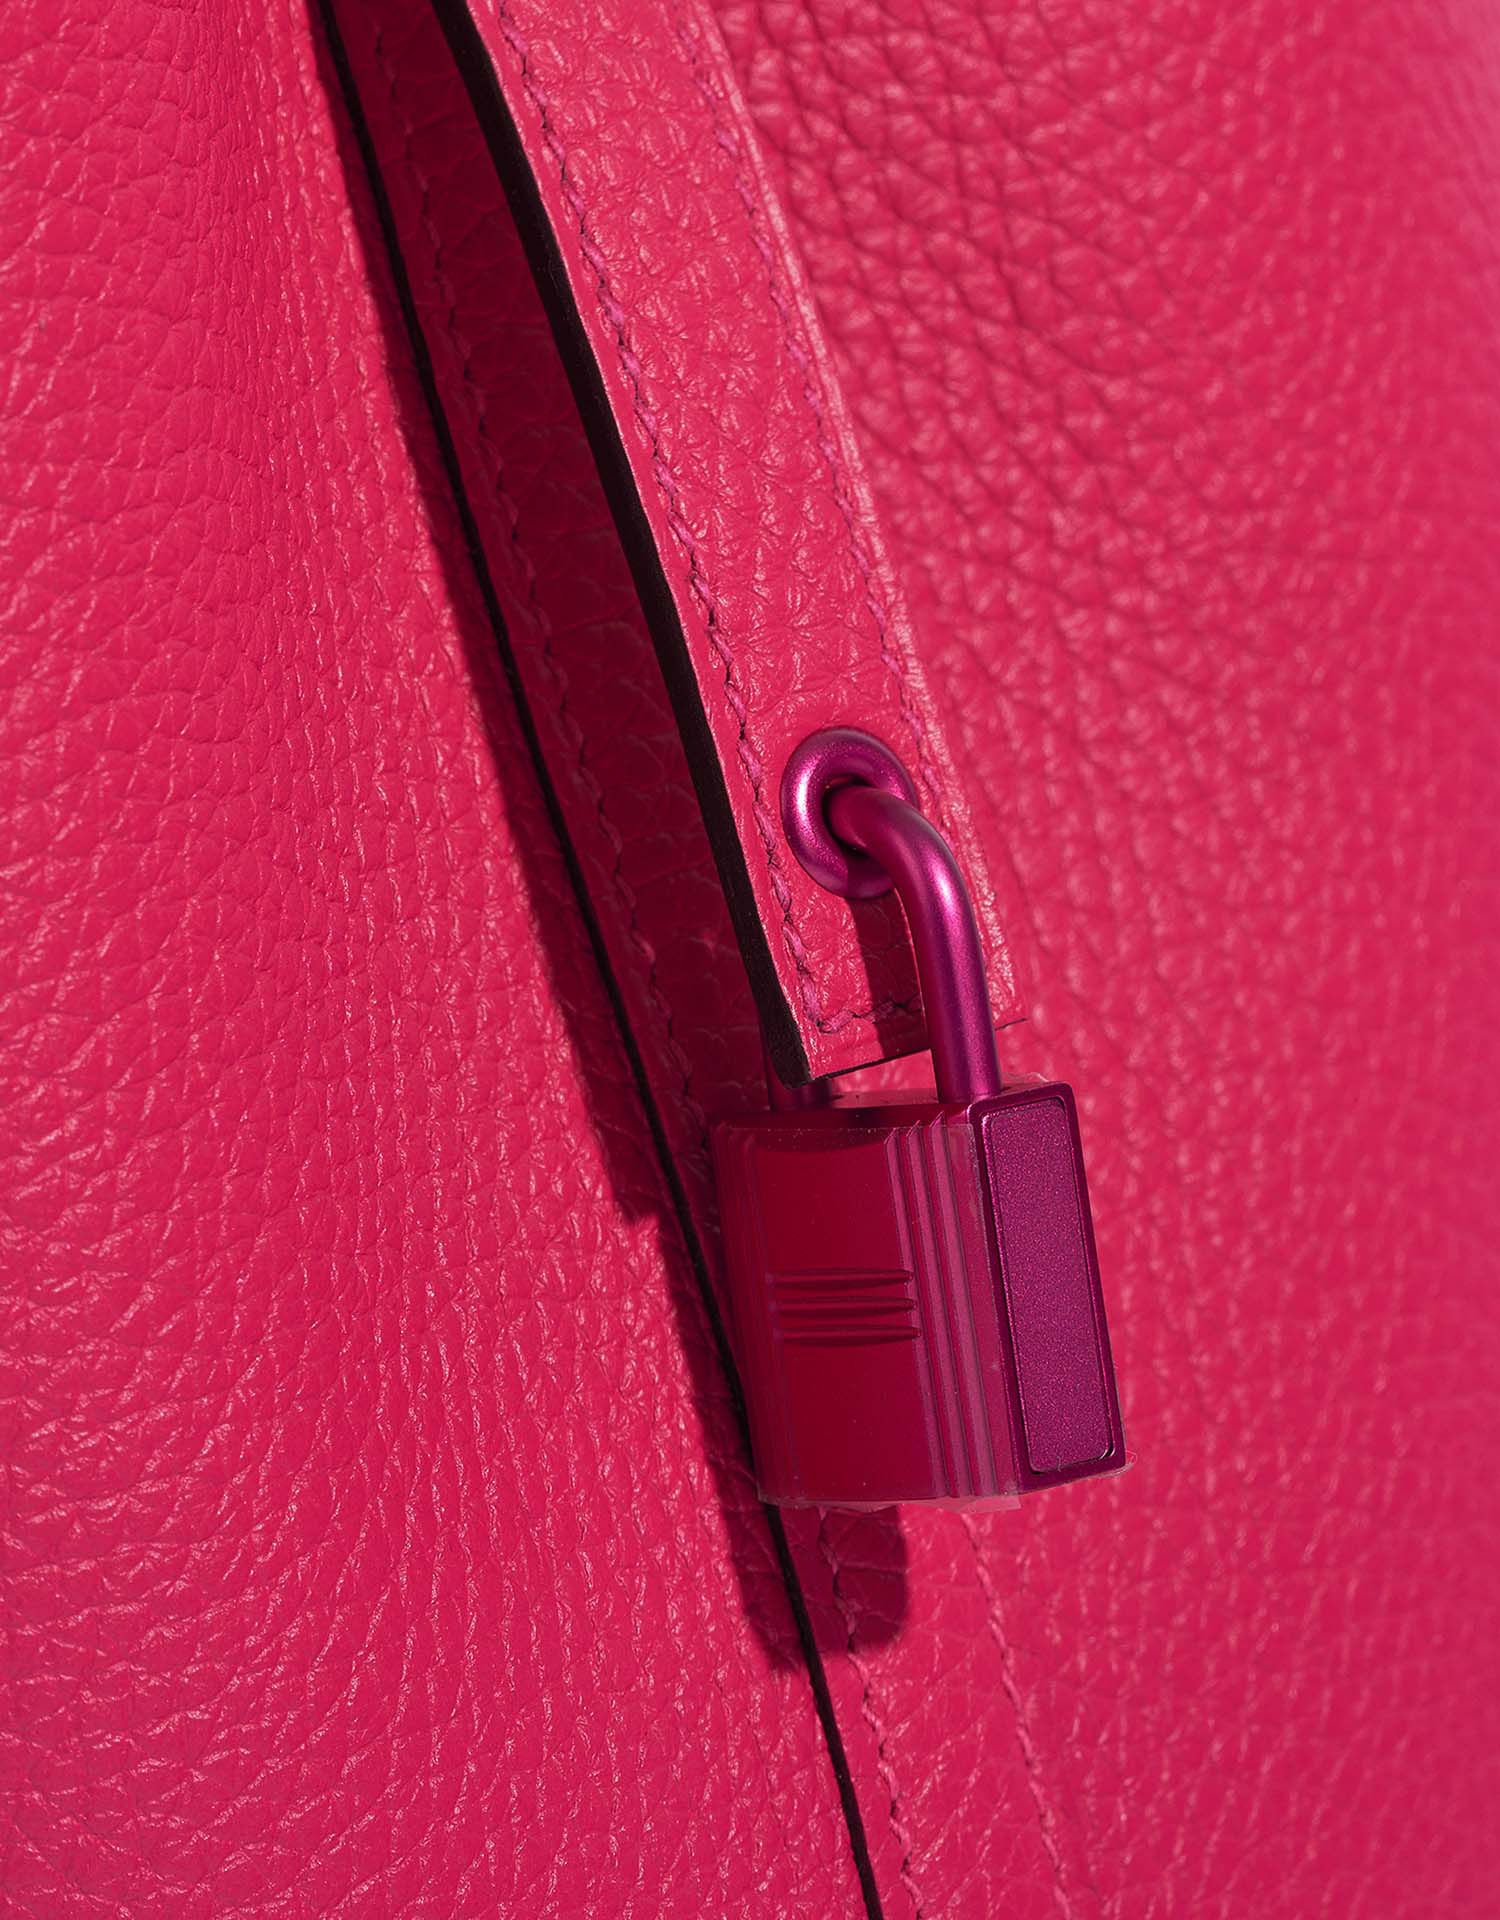 Hermès Picotin 18 RoseMexico Closing System  | Sell your designer bag on Saclab.com